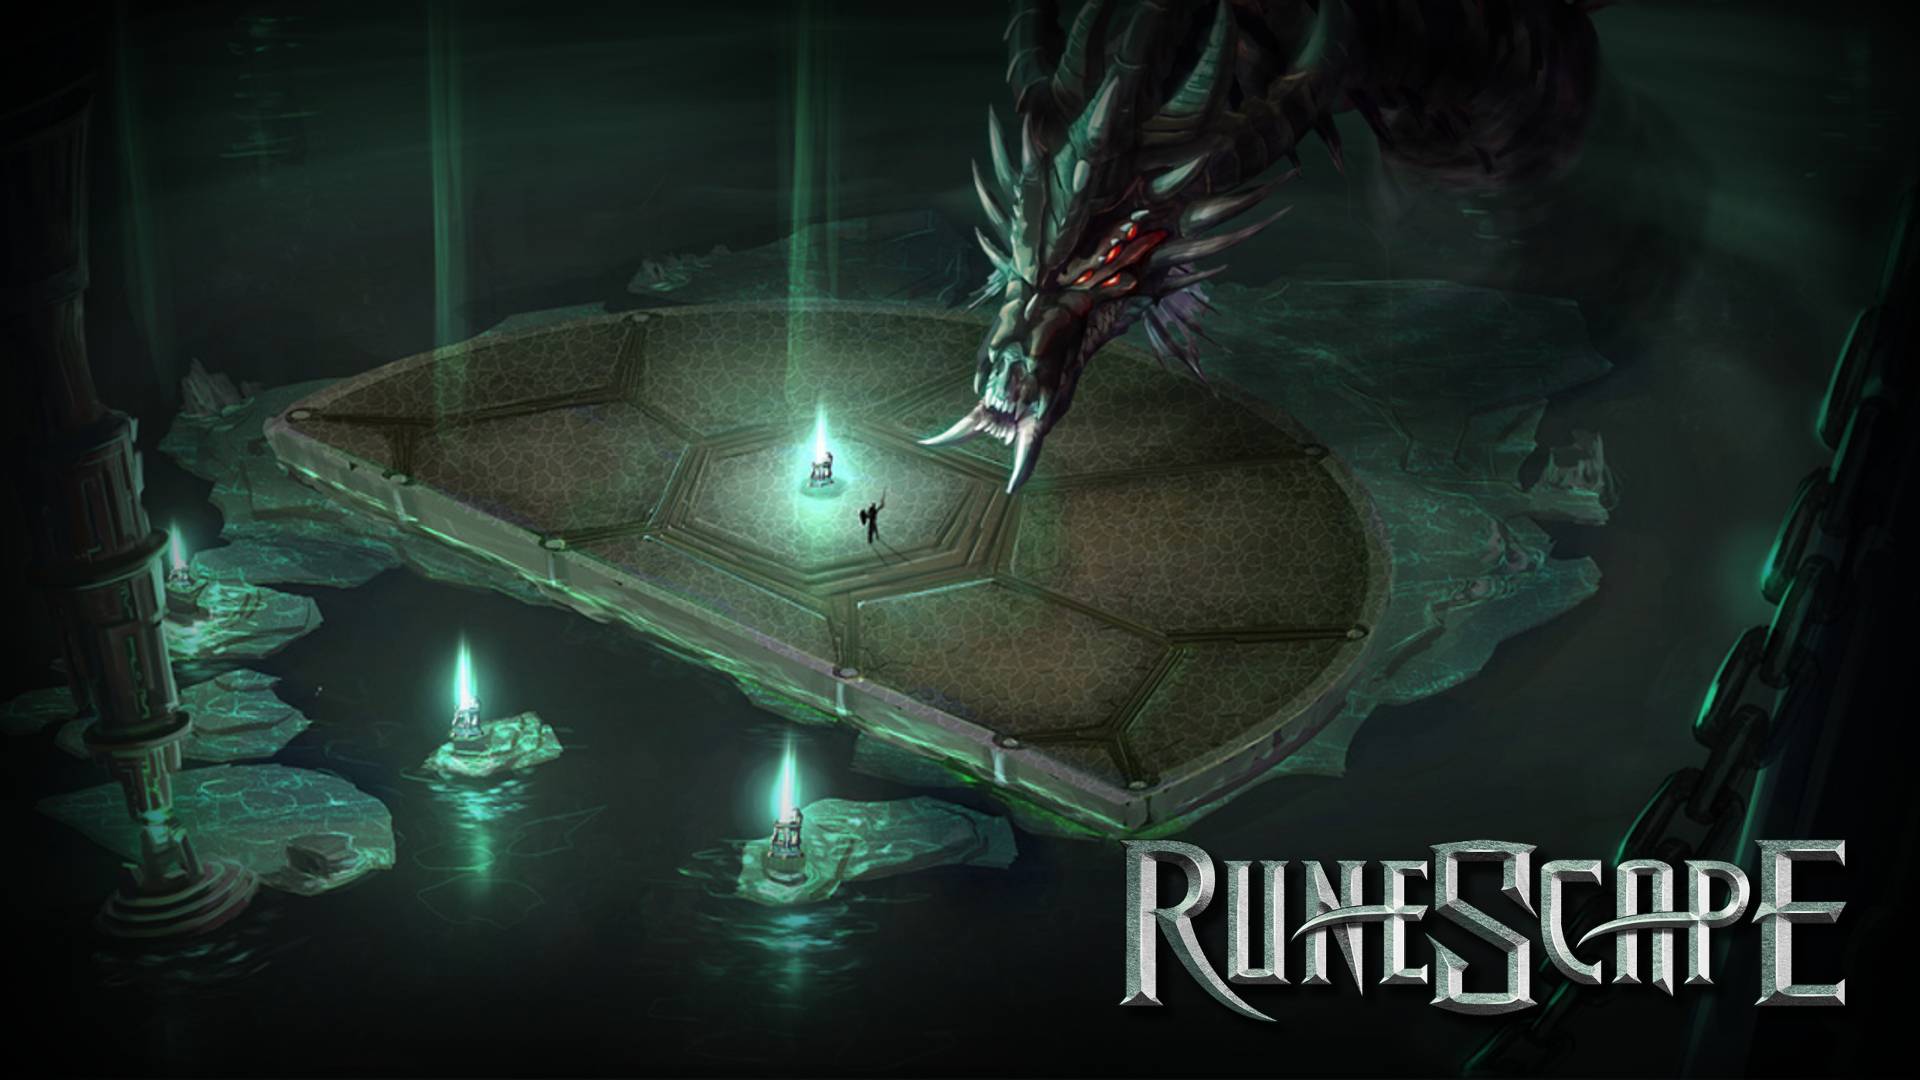 Runescape Fantasy Adventure Wallpapers Hd Desktop And Mobile Backgrounds